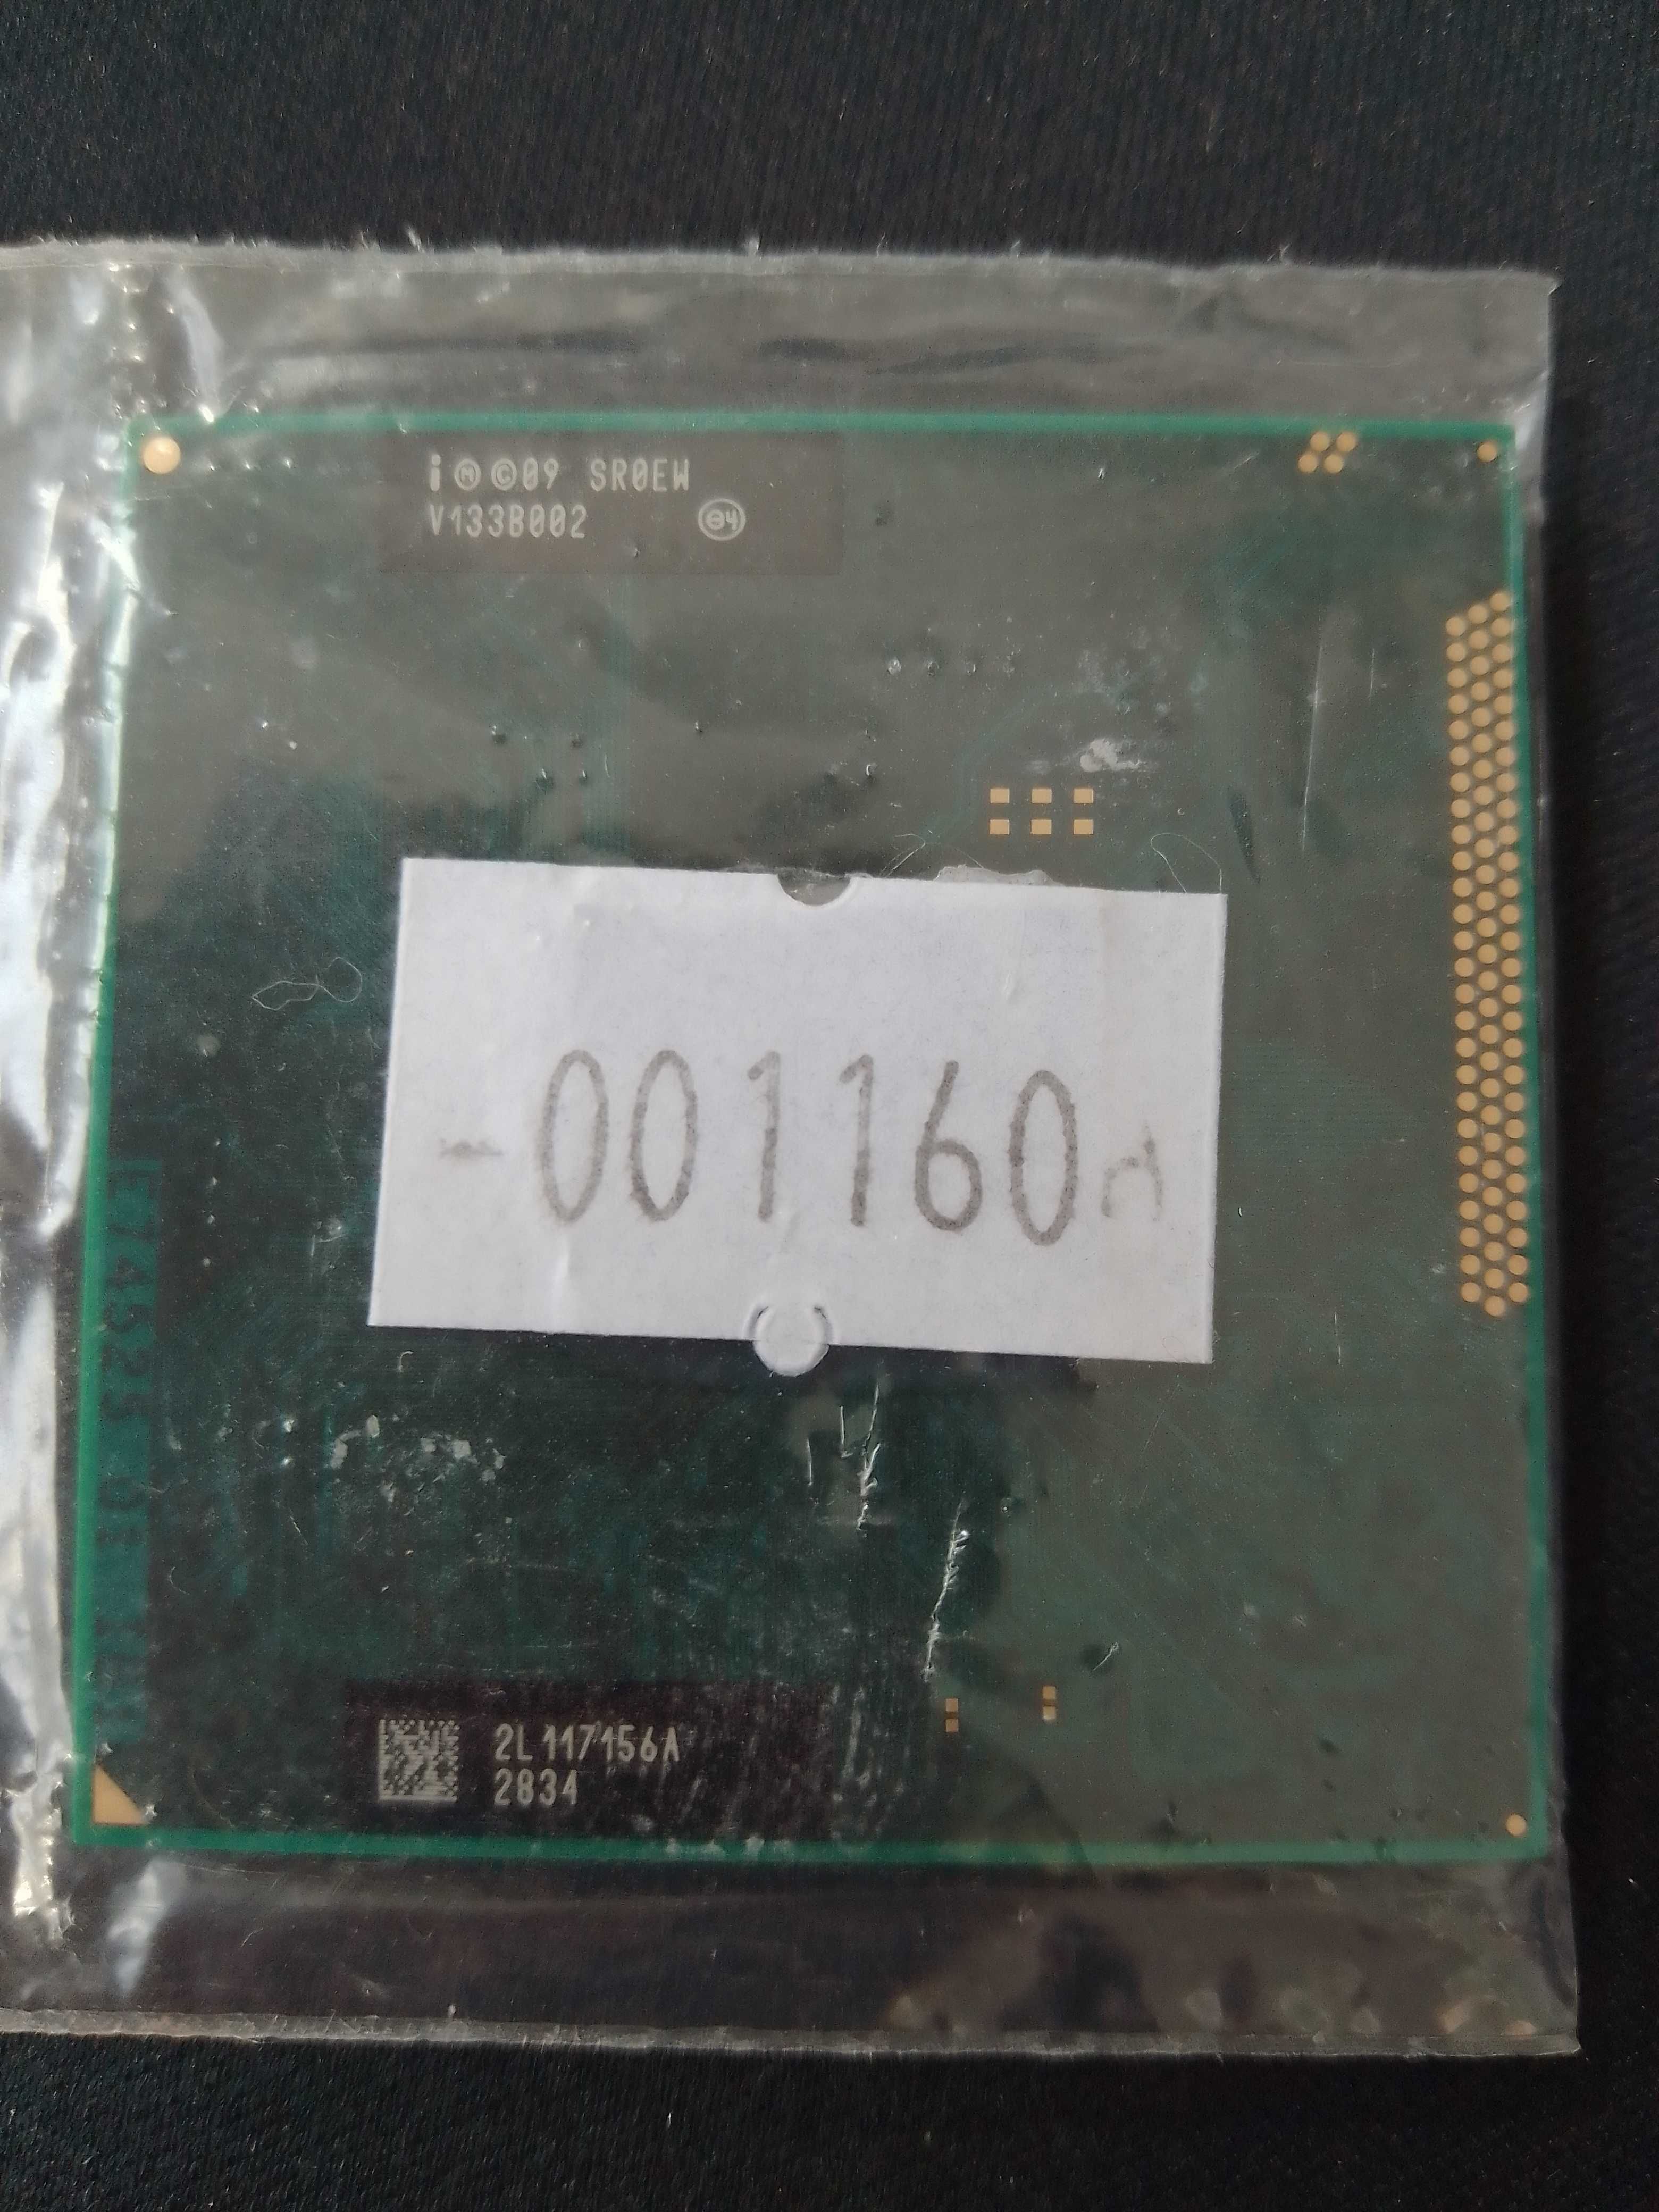 Procesor Intel Celeron B800 V133B002 SR0EW (001160)